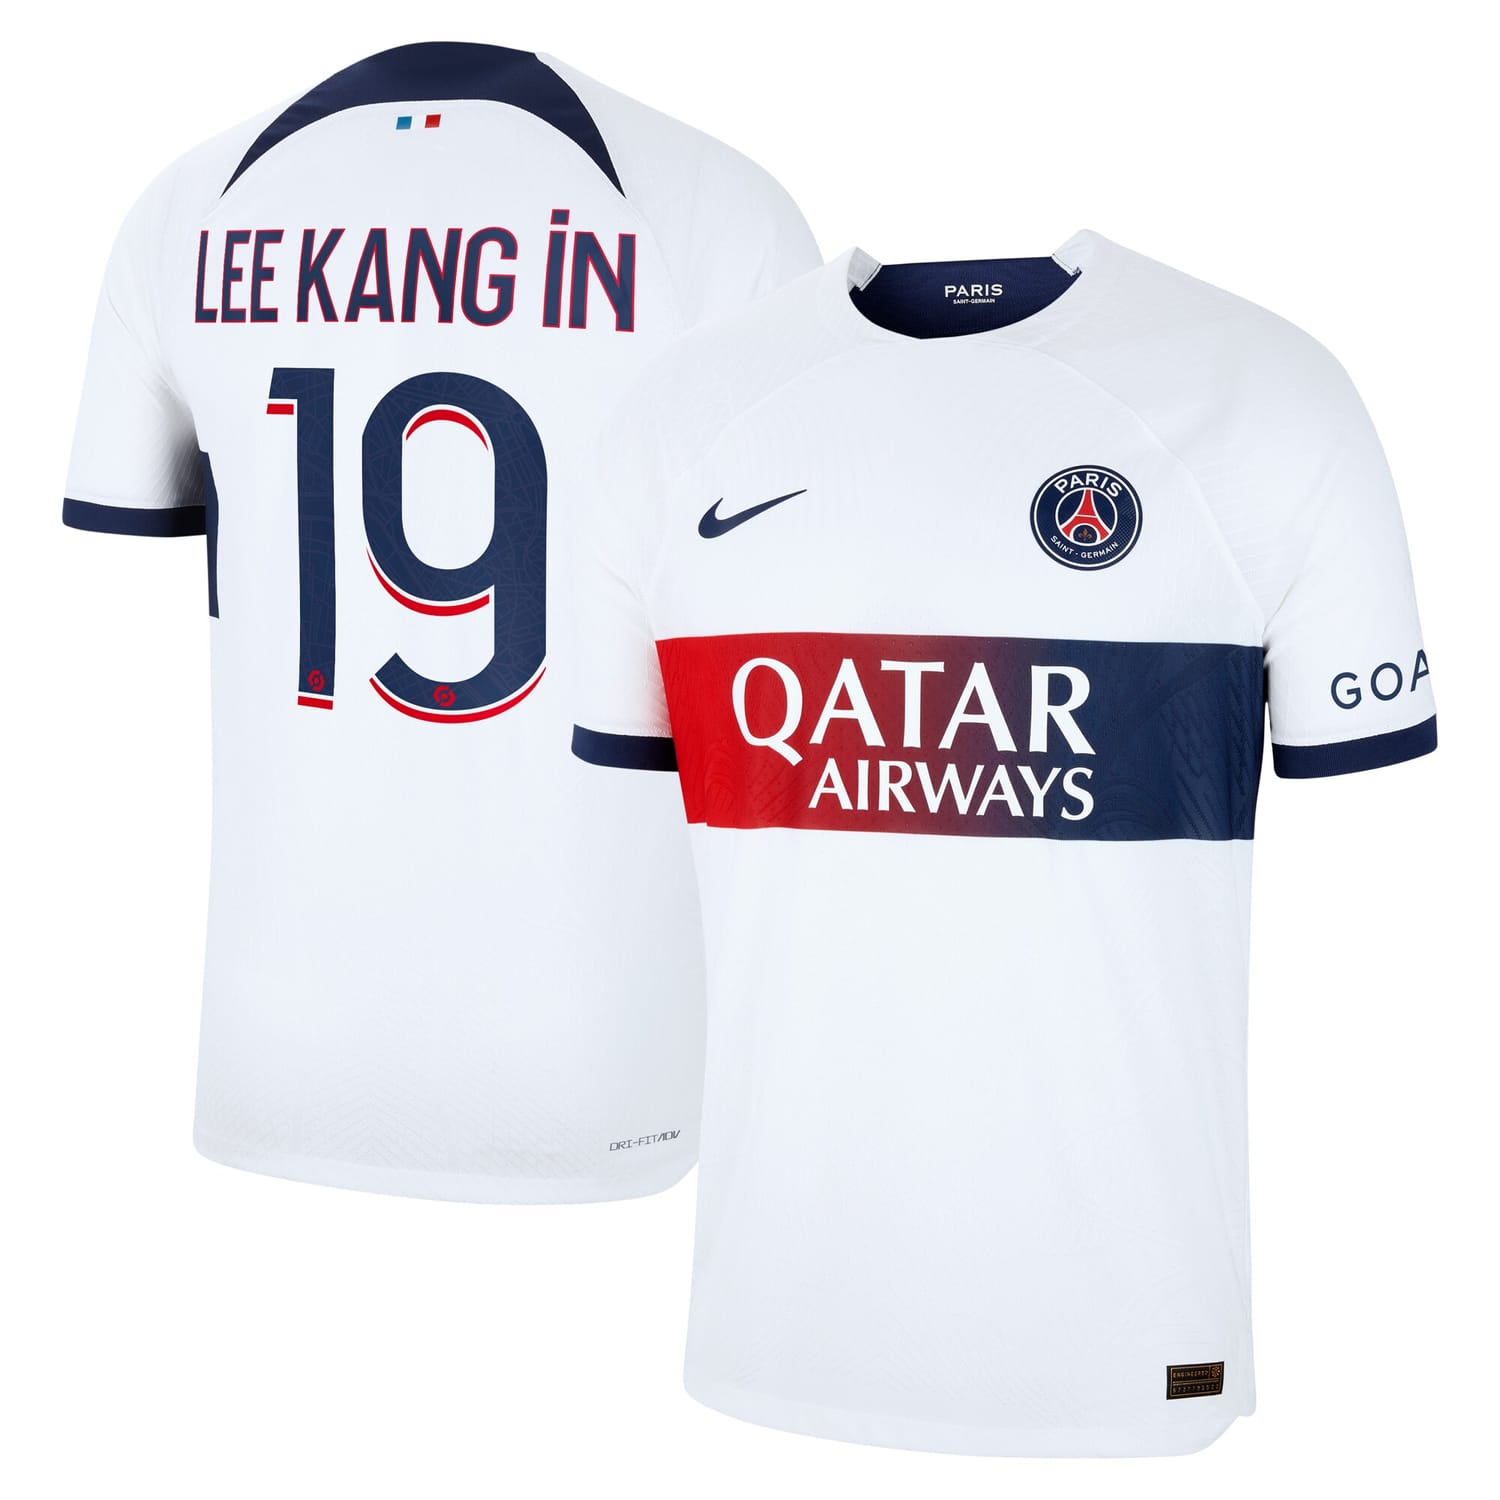 Ligue 1 Paris Saint-Germain Away Authentic Jersey Shirt White 2023-24 player Lee Kang In printing for Men